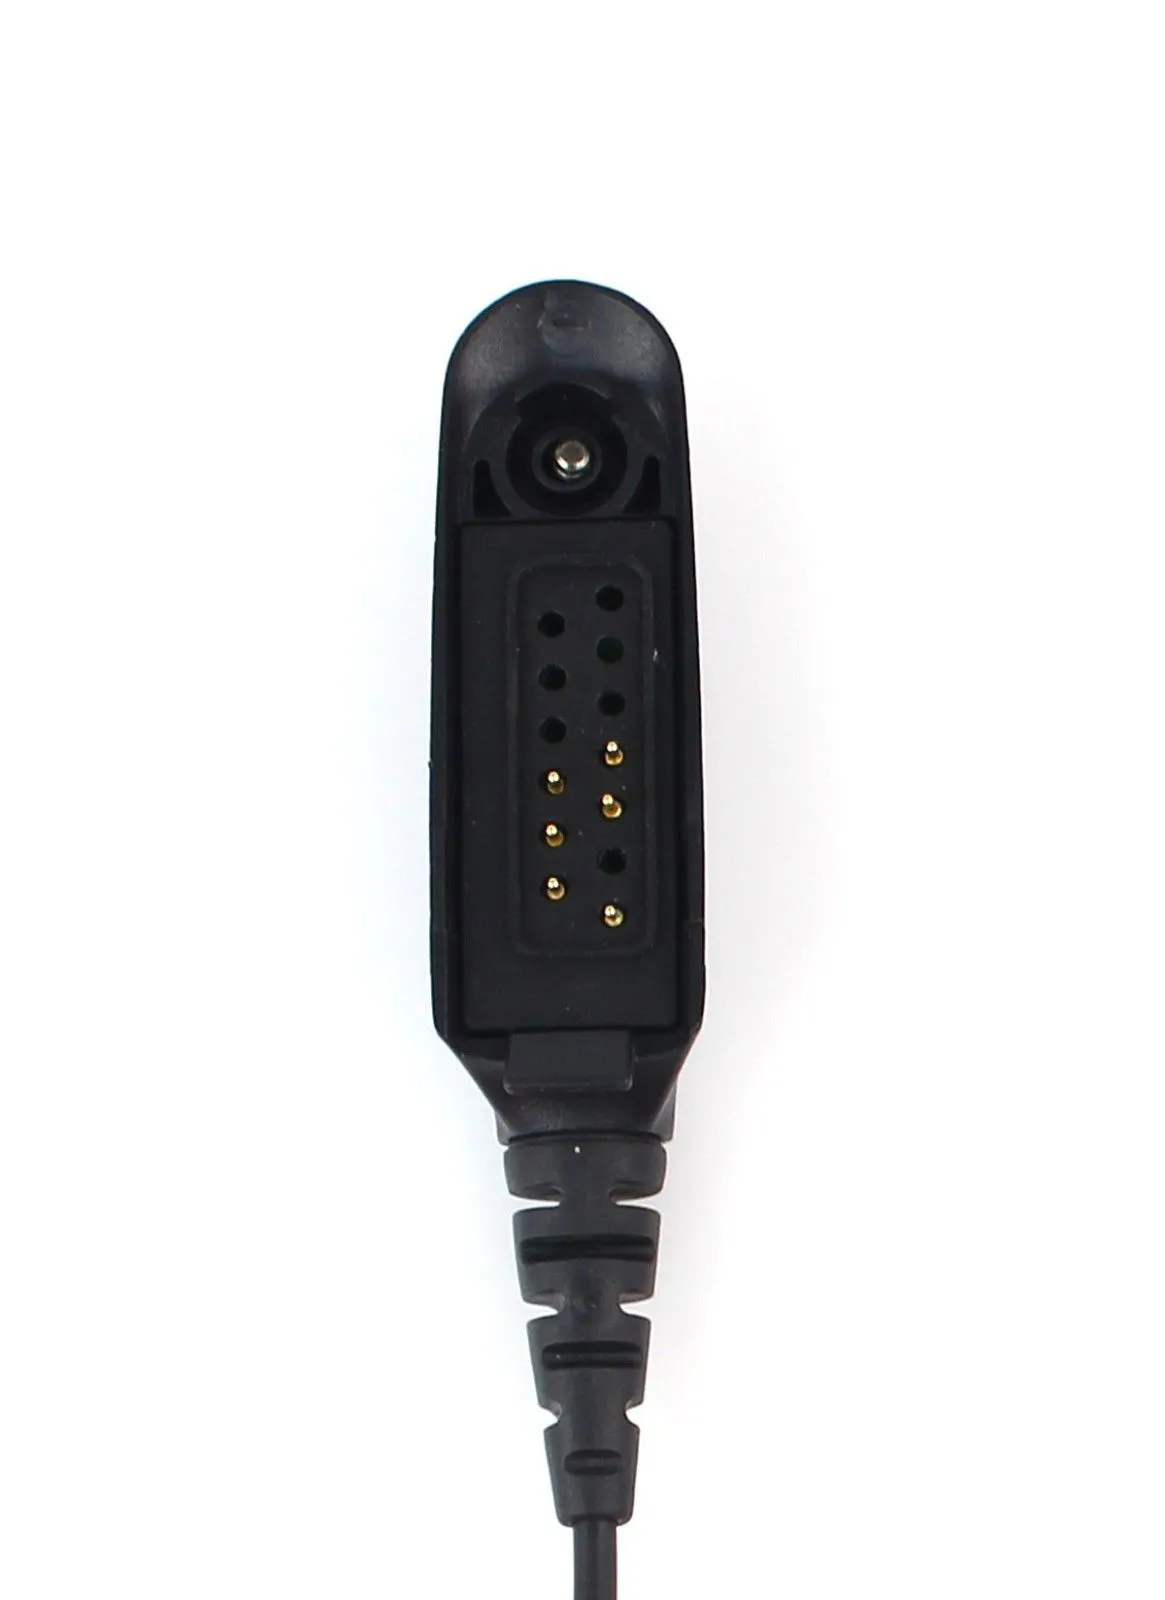 Vox PTT Earpiece Headset Mic för Motorola HT750 gp328 gp329 / 340 gp380 radio